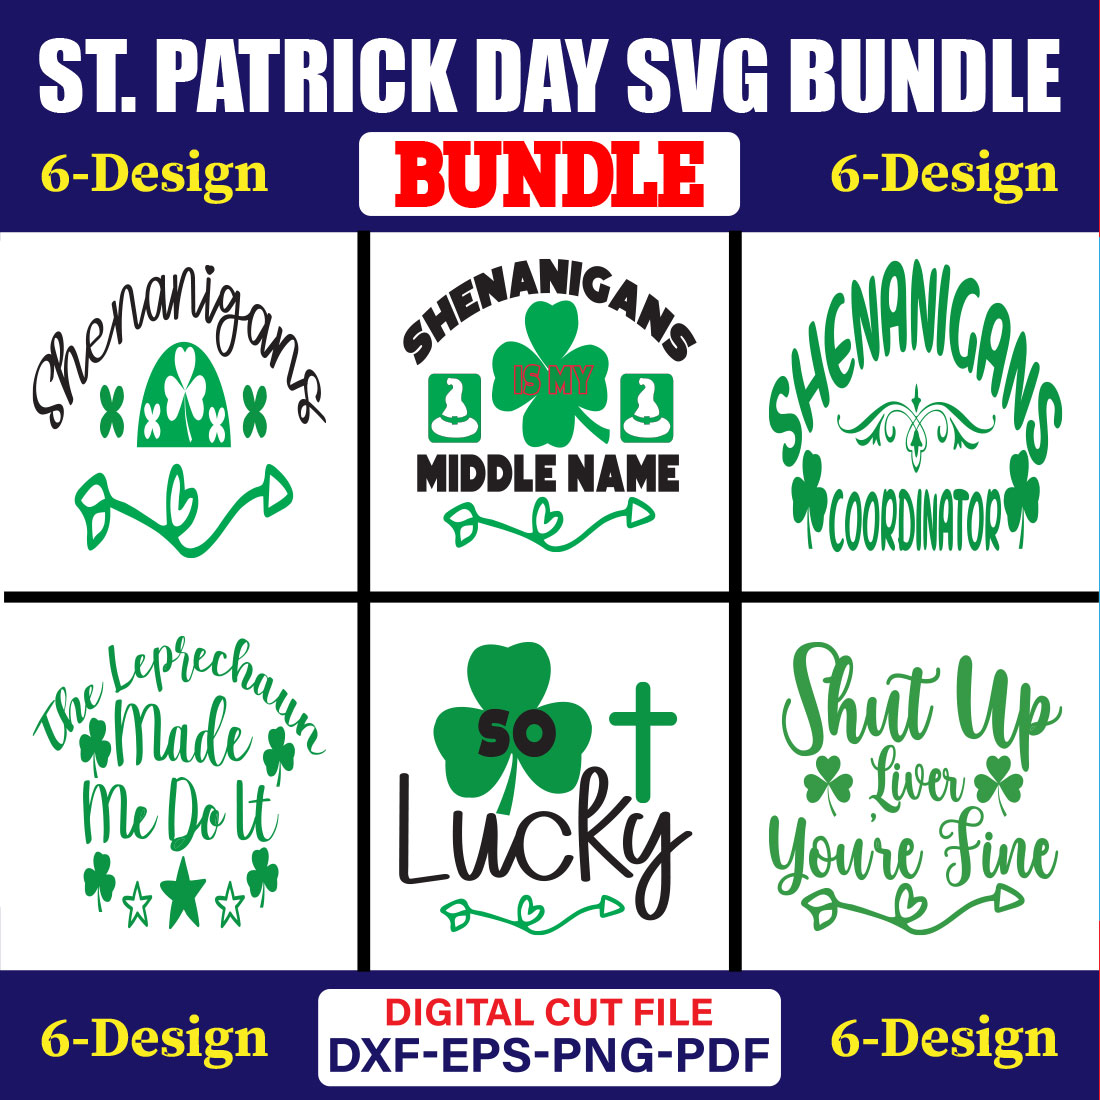 St Patrick Day SVG T-shirt Design Bundle Vol-31 cover image.